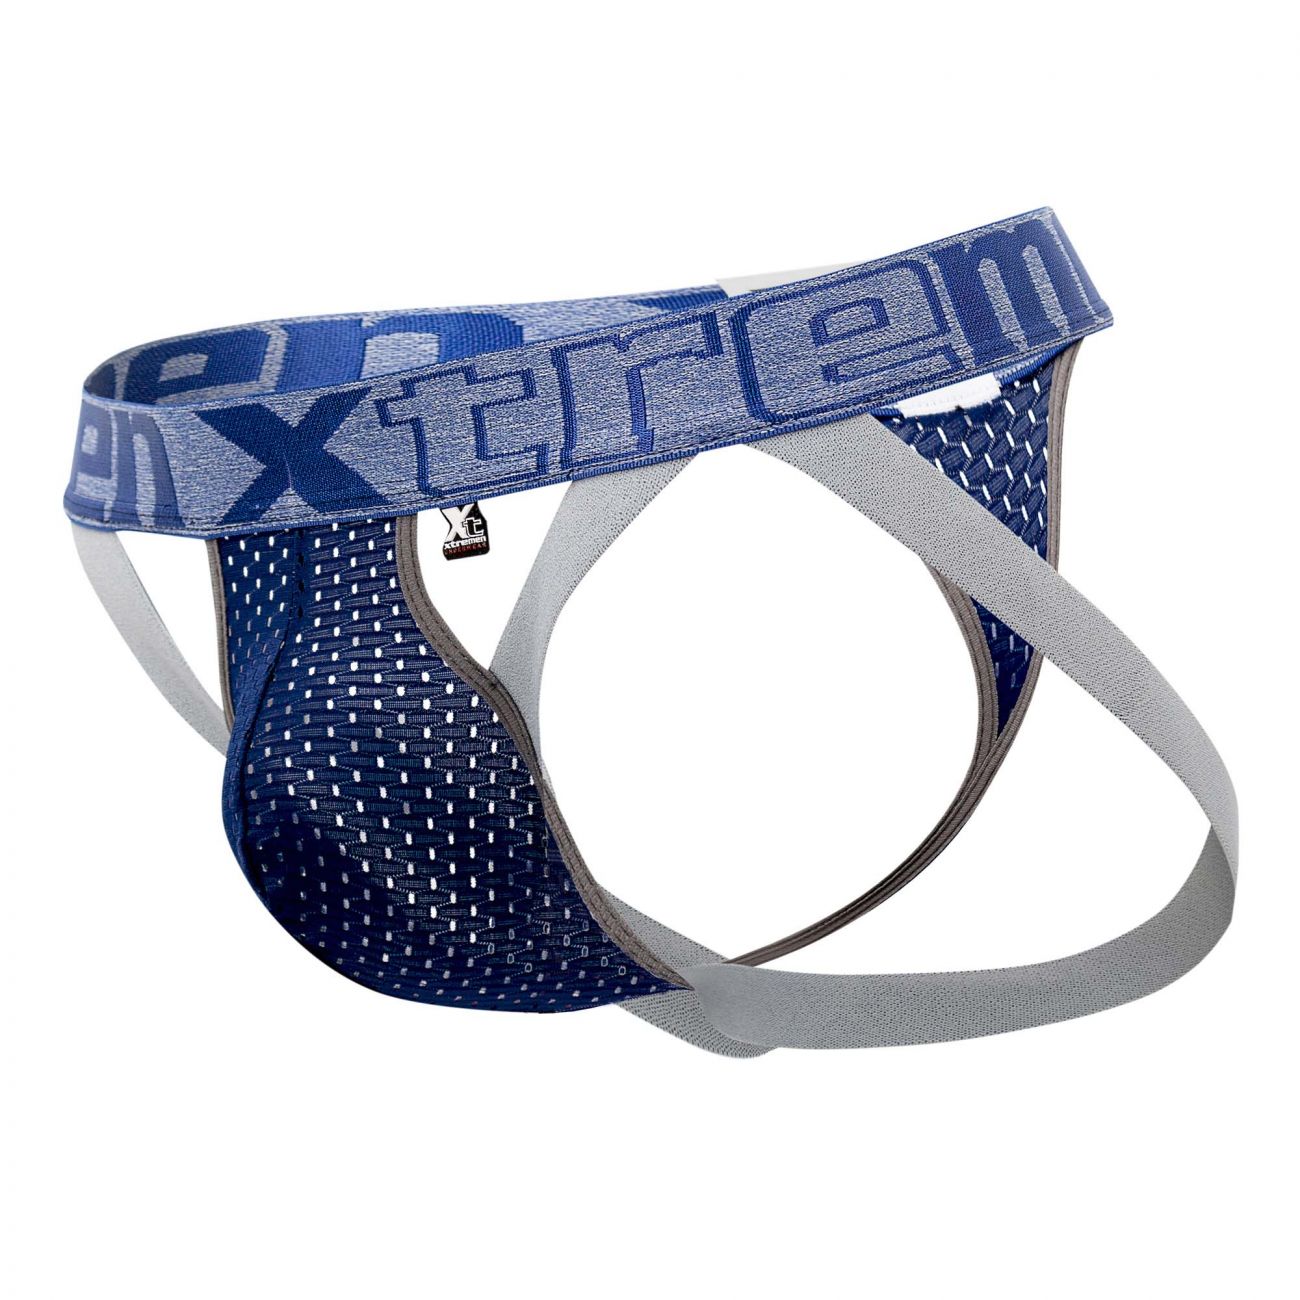 Underwear: Xtremen 91060 Athletic Jockstrap Thongs | eBay